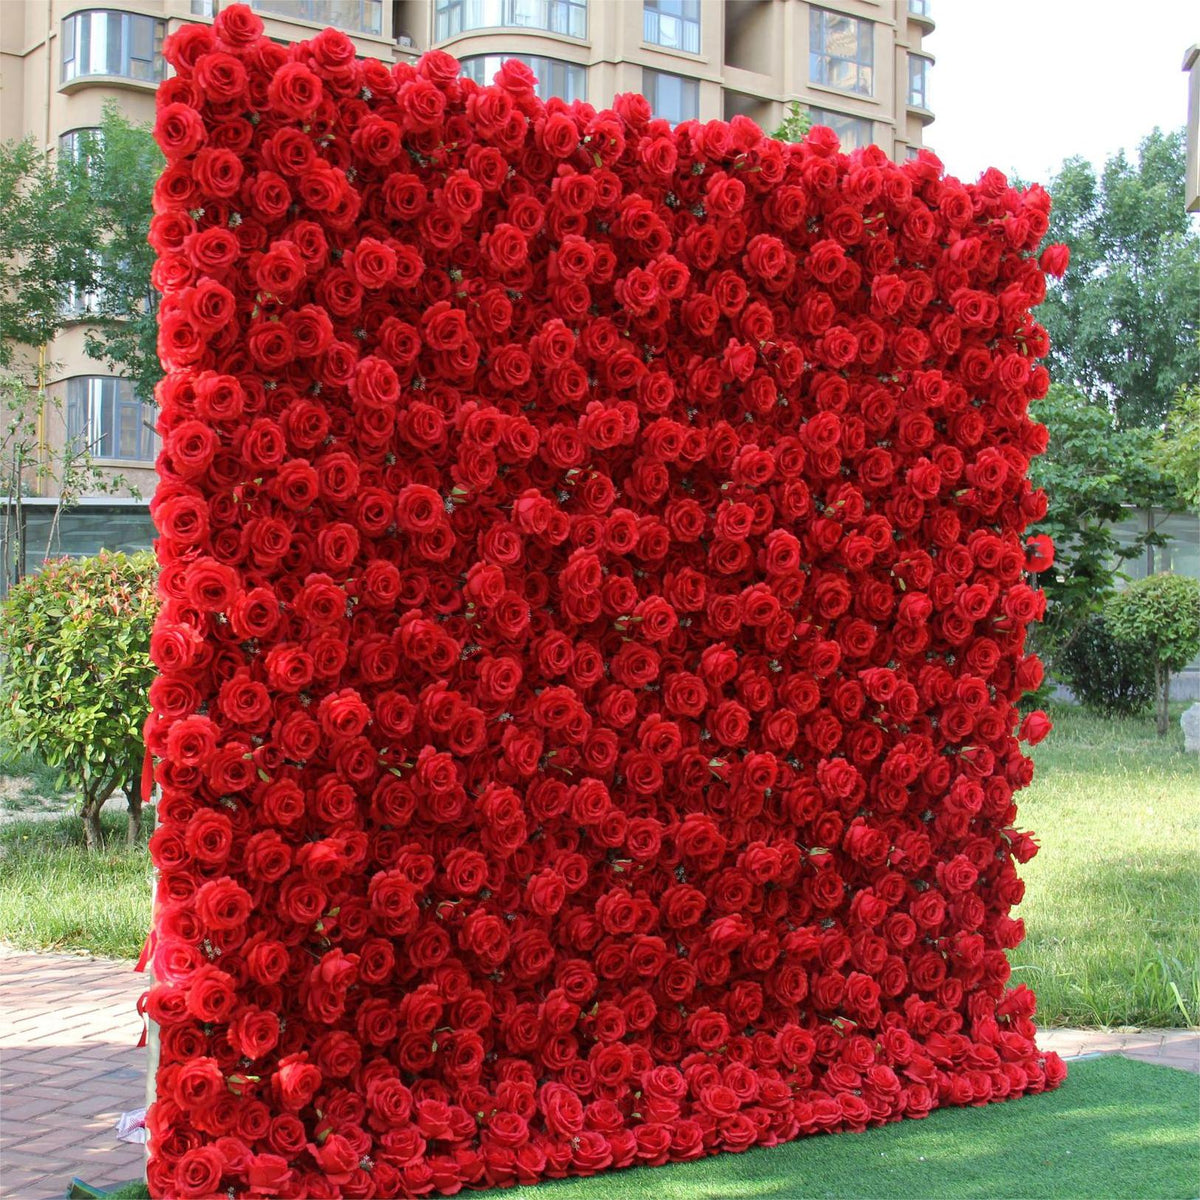 3D Artificial Flower Wall Arrangement Wedding Party Birthday Backdrop Decor HQ3905